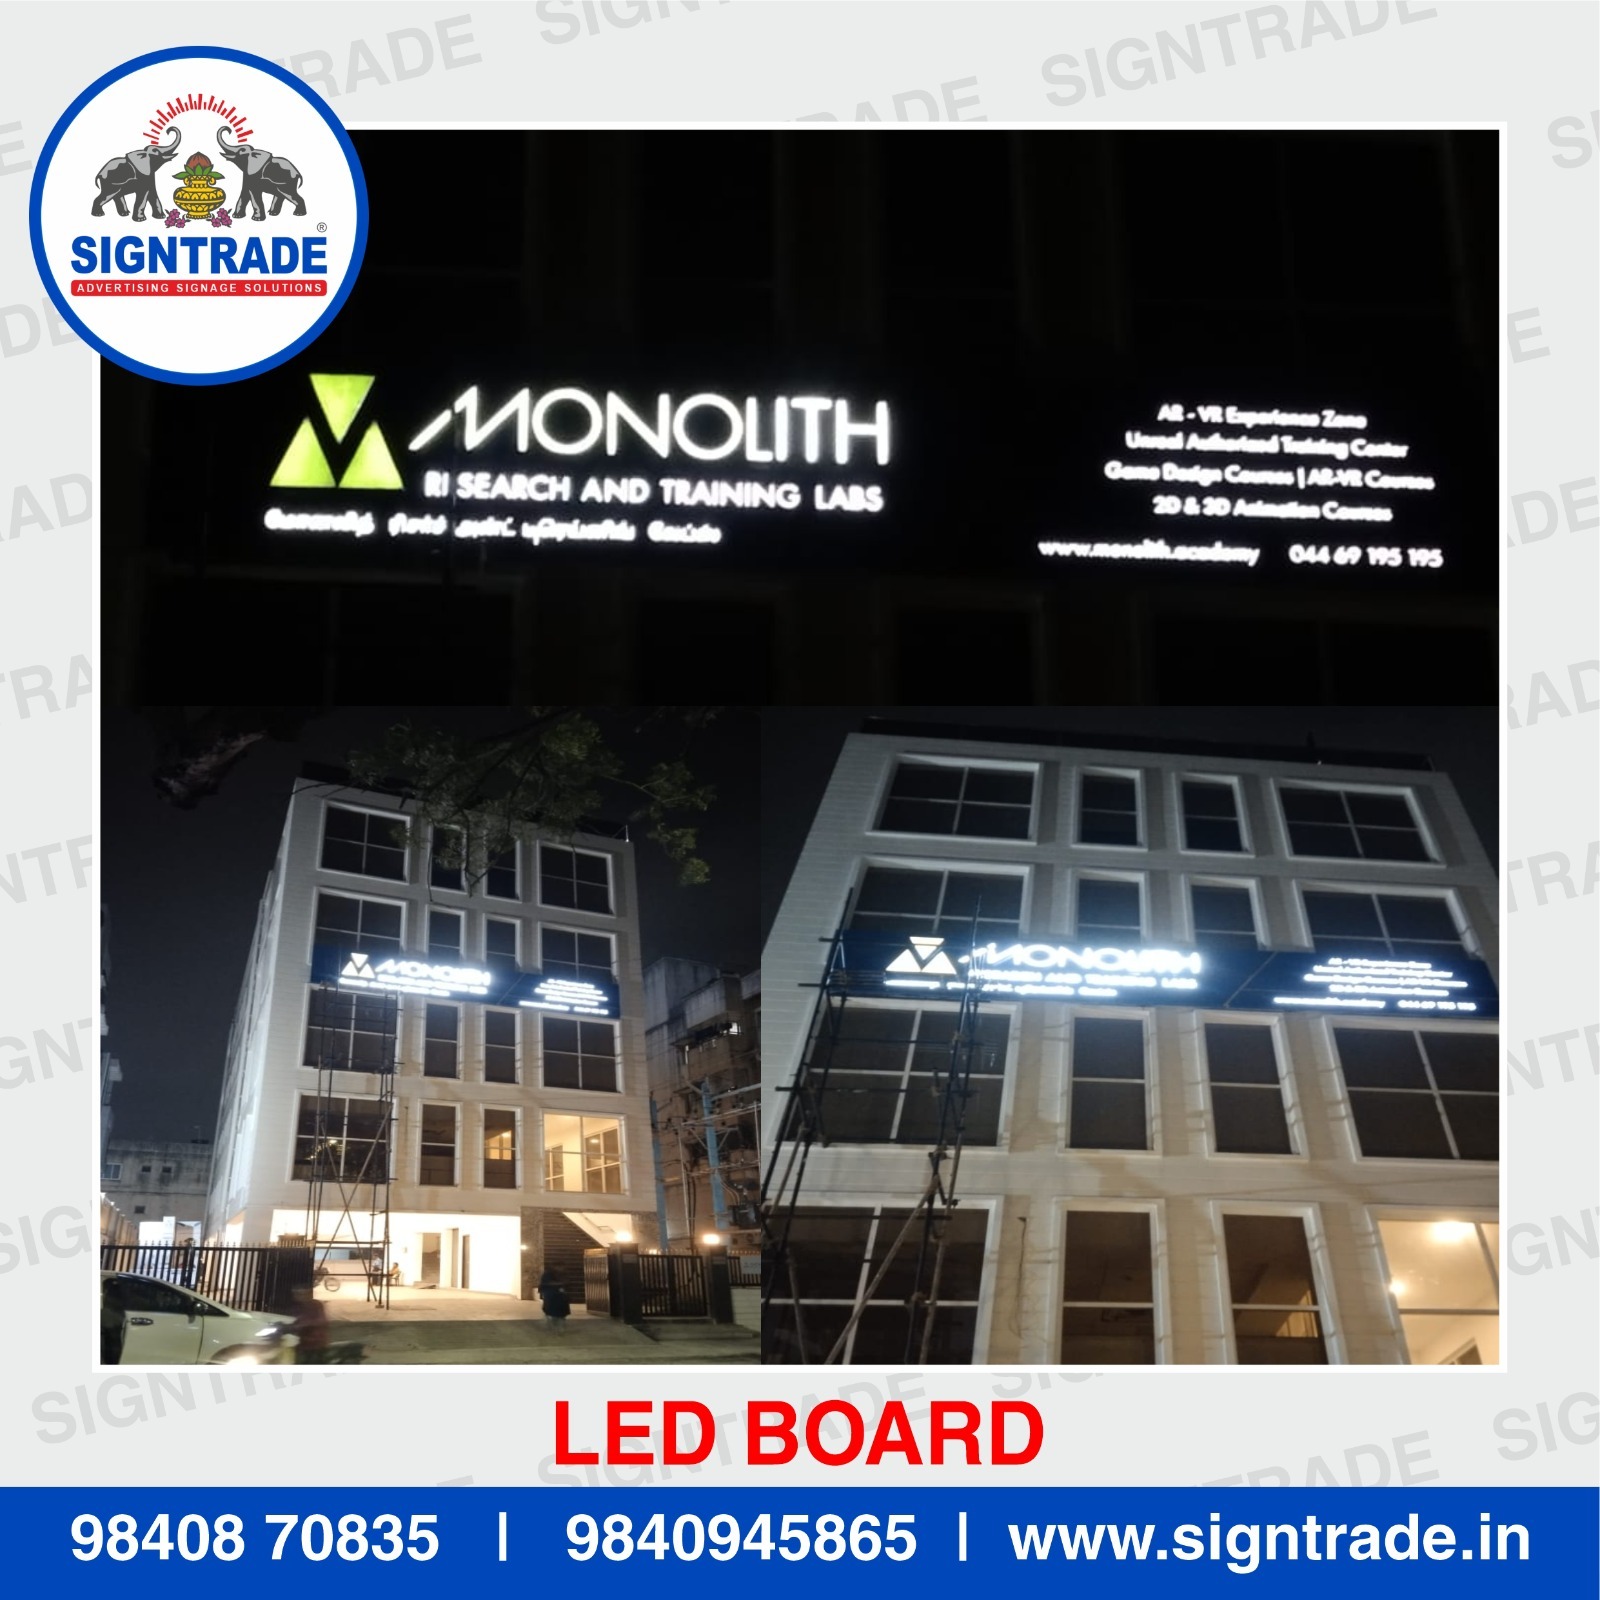 LED Sign Board in Chennai